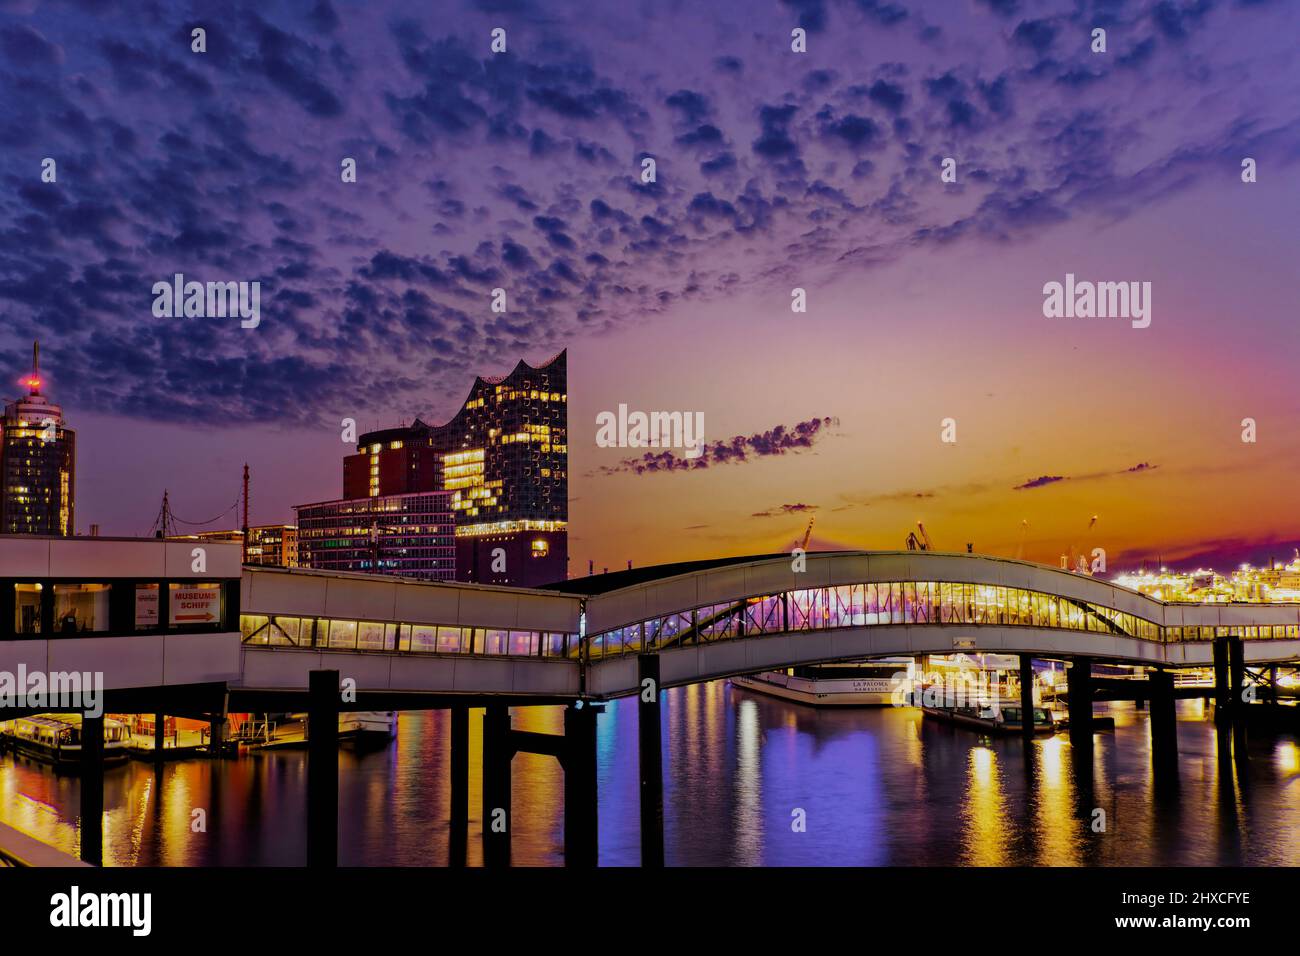 Elbphilharmonie, Hamburg, Germany, Europe Stock Photo